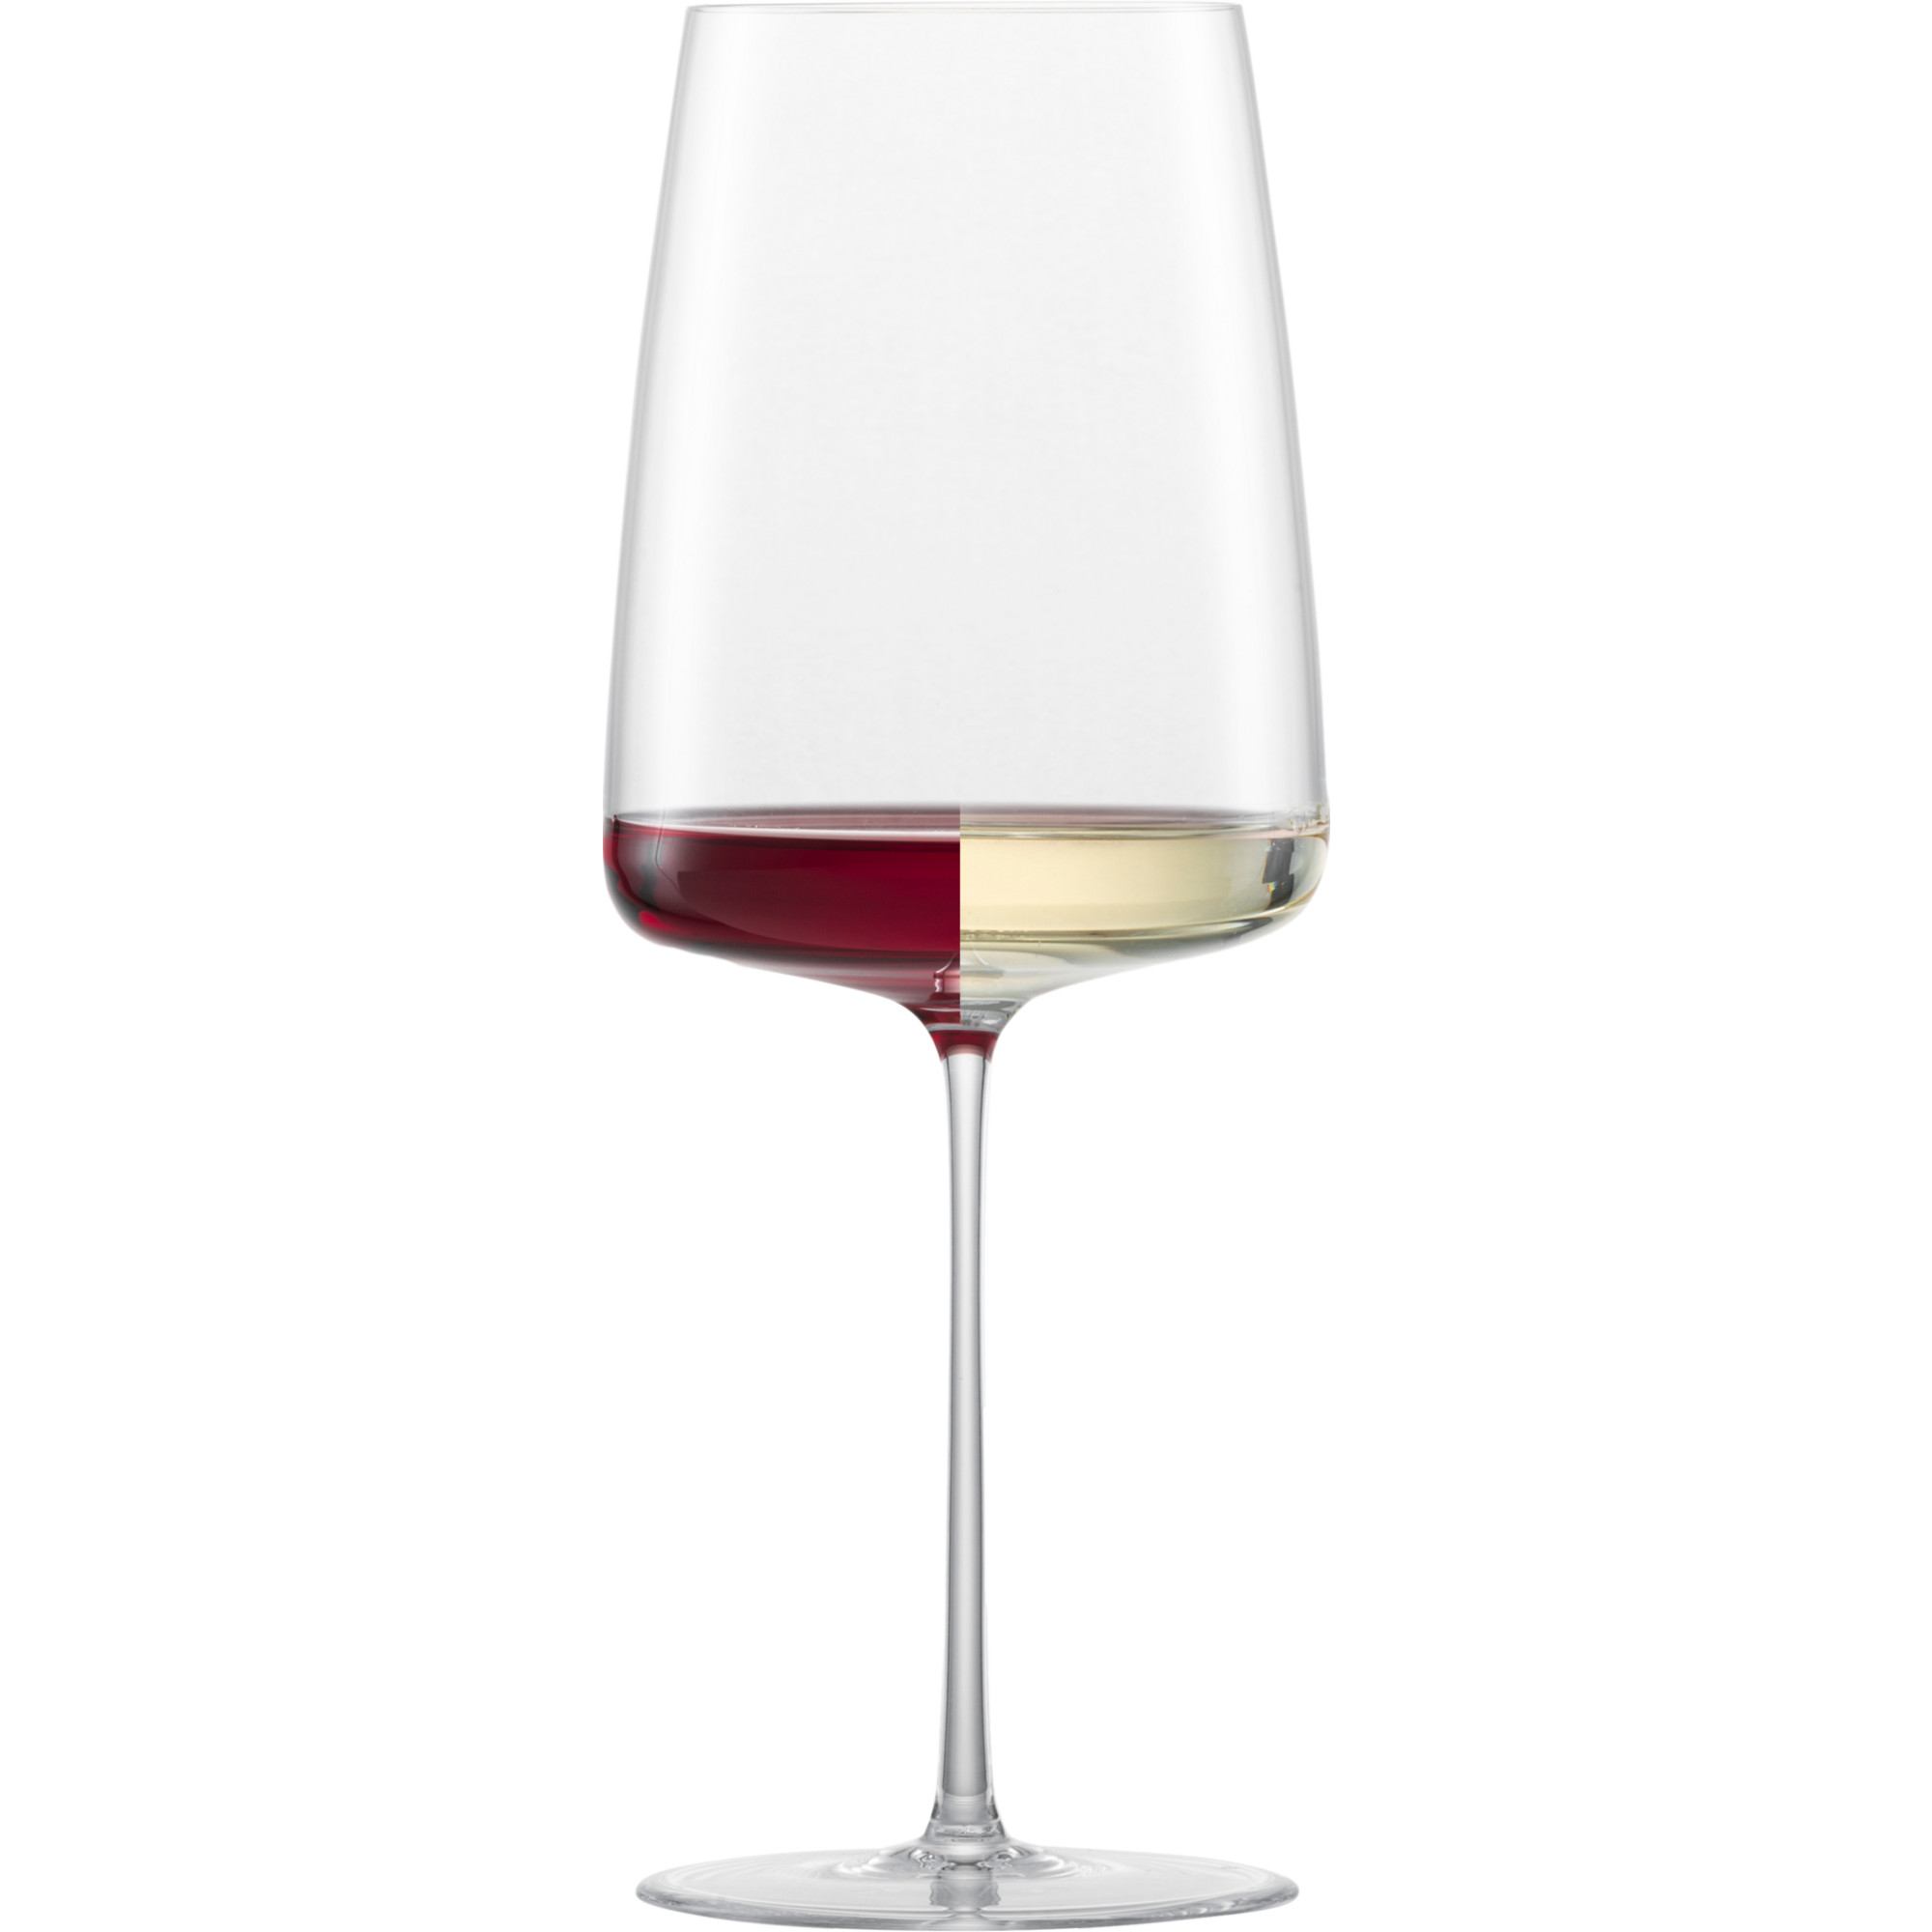 Image of Simplify Weinglas fruchtig & fein, 2er, Accessoires